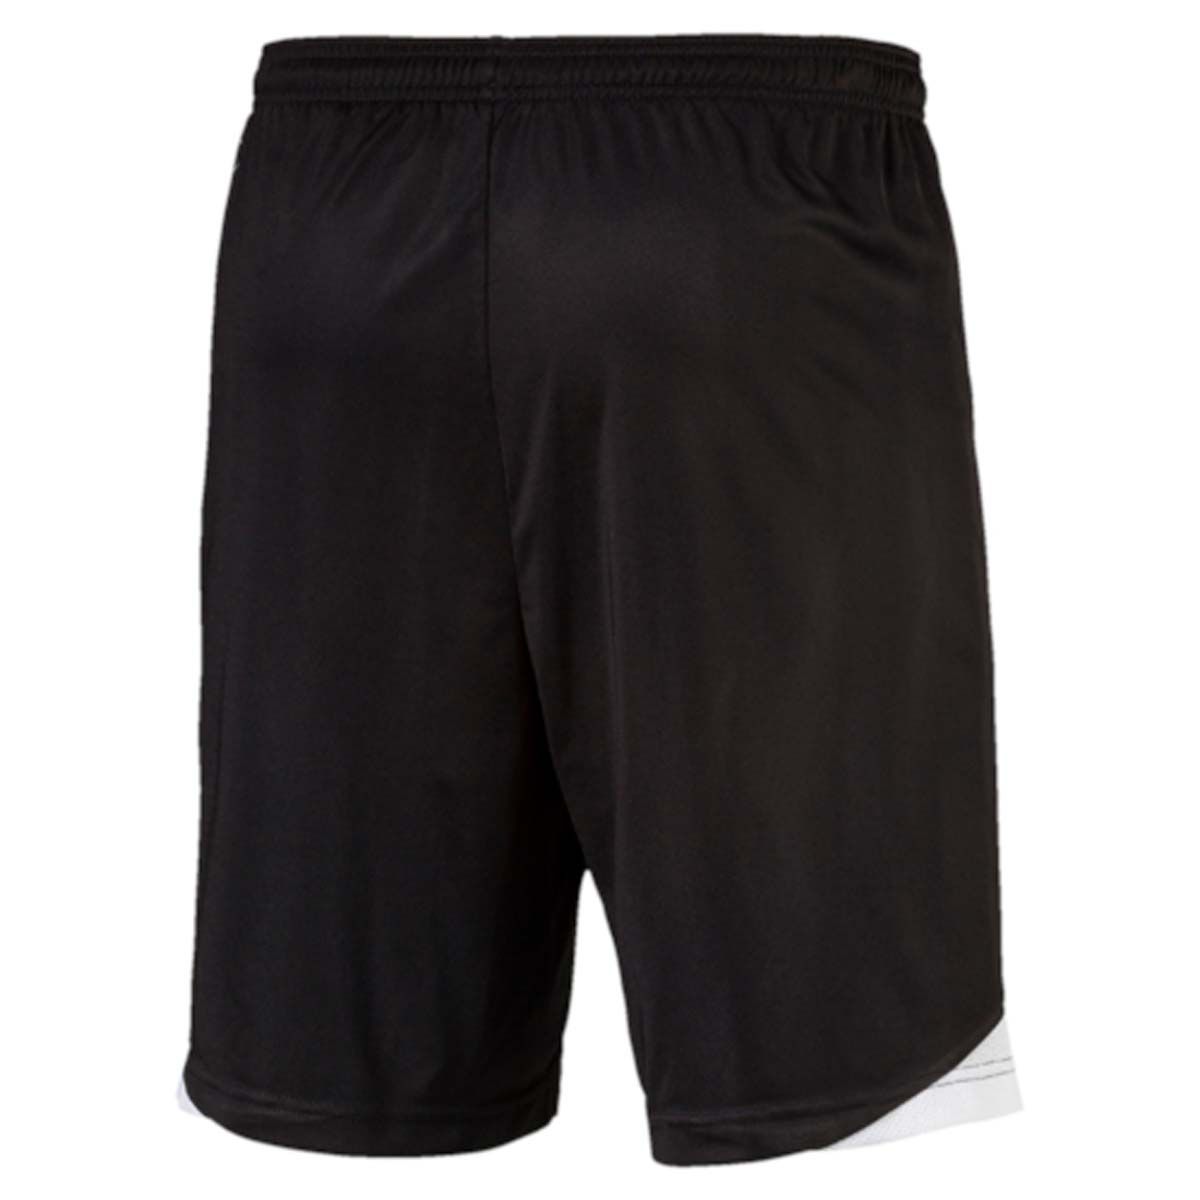   Puma FtblTRG Shorts, : , . 655208_03.  S (44/46)